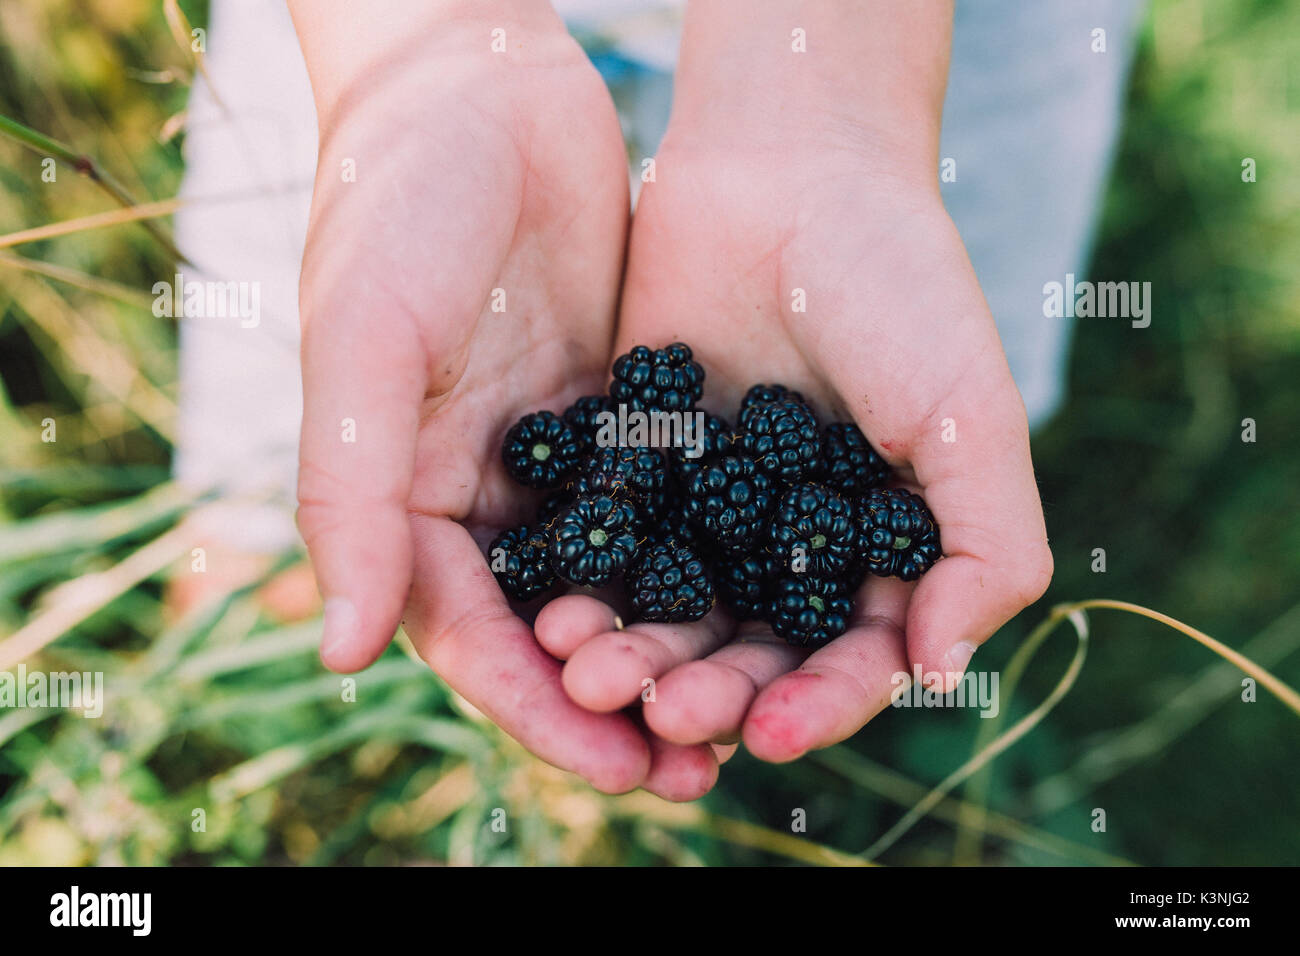 hands holding blackberries Stock Photo